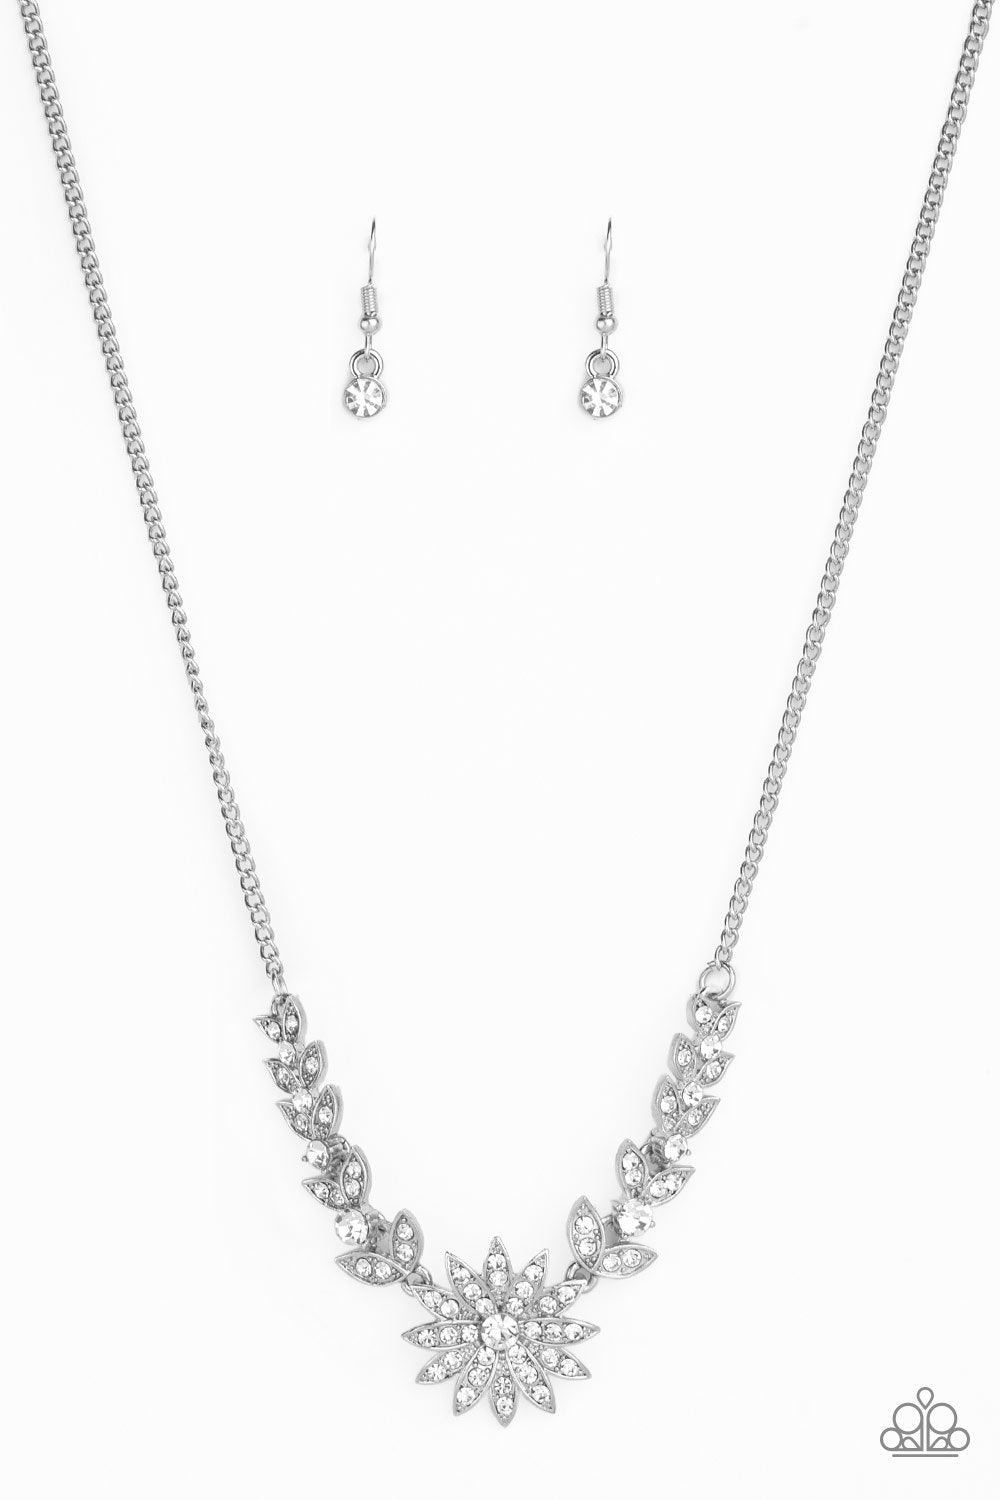 Garden Glamour White Rhinestone Flower Necklace - Paparazzi Accessories-CarasShop.com - $5 Jewelry by Cara Jewels